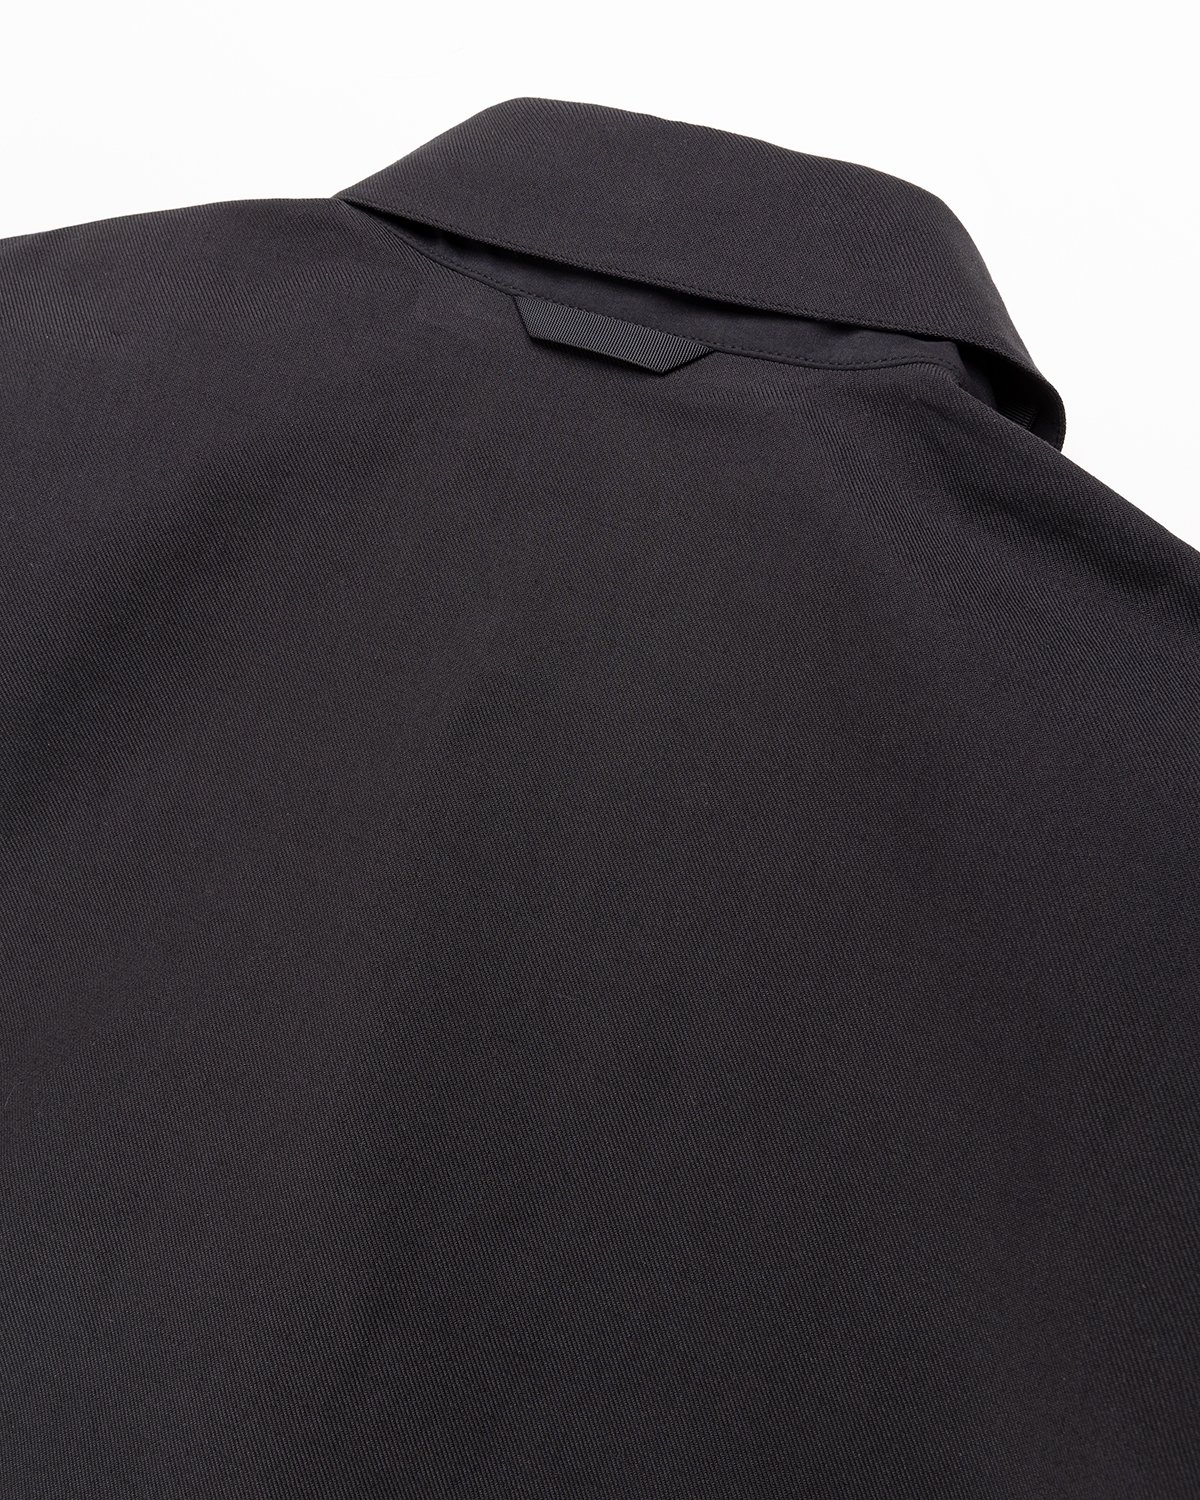 ACRONYM - J94-VT Black/Black - Clothing - Black - Image 4